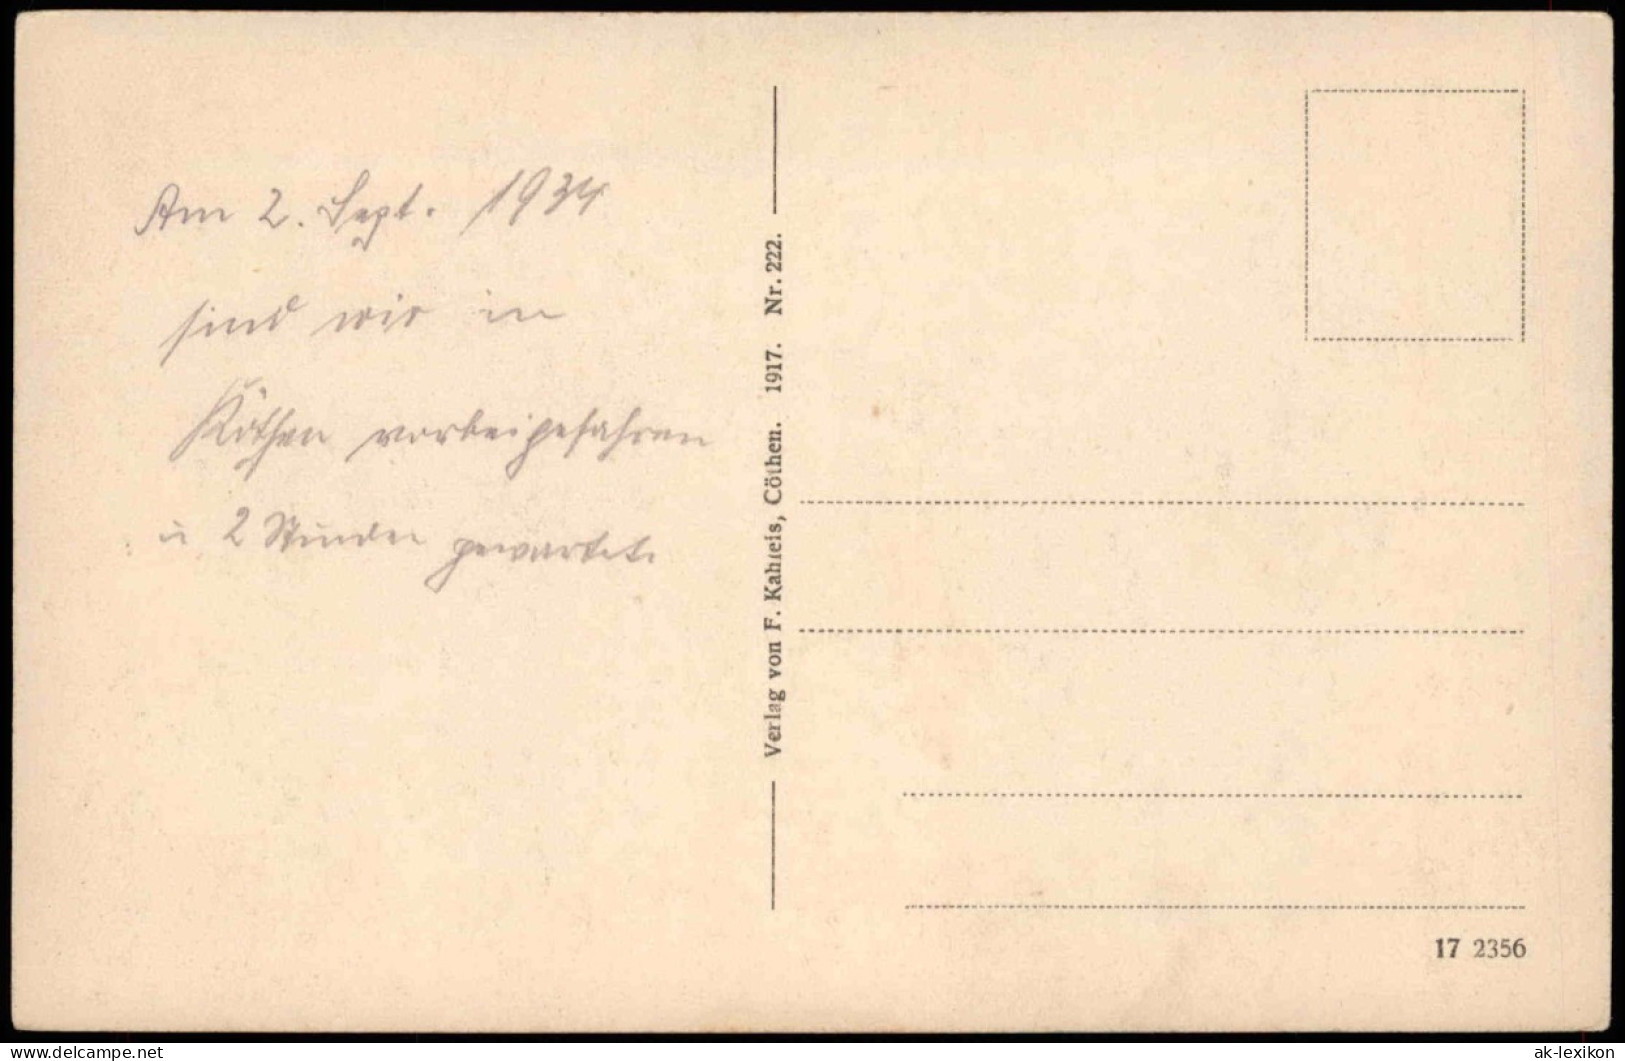 Ansichtskarte Köthen St. Martinskirdhe, Rückseite Mit Pastorenhaus 1919 - Koethen (Anhalt)